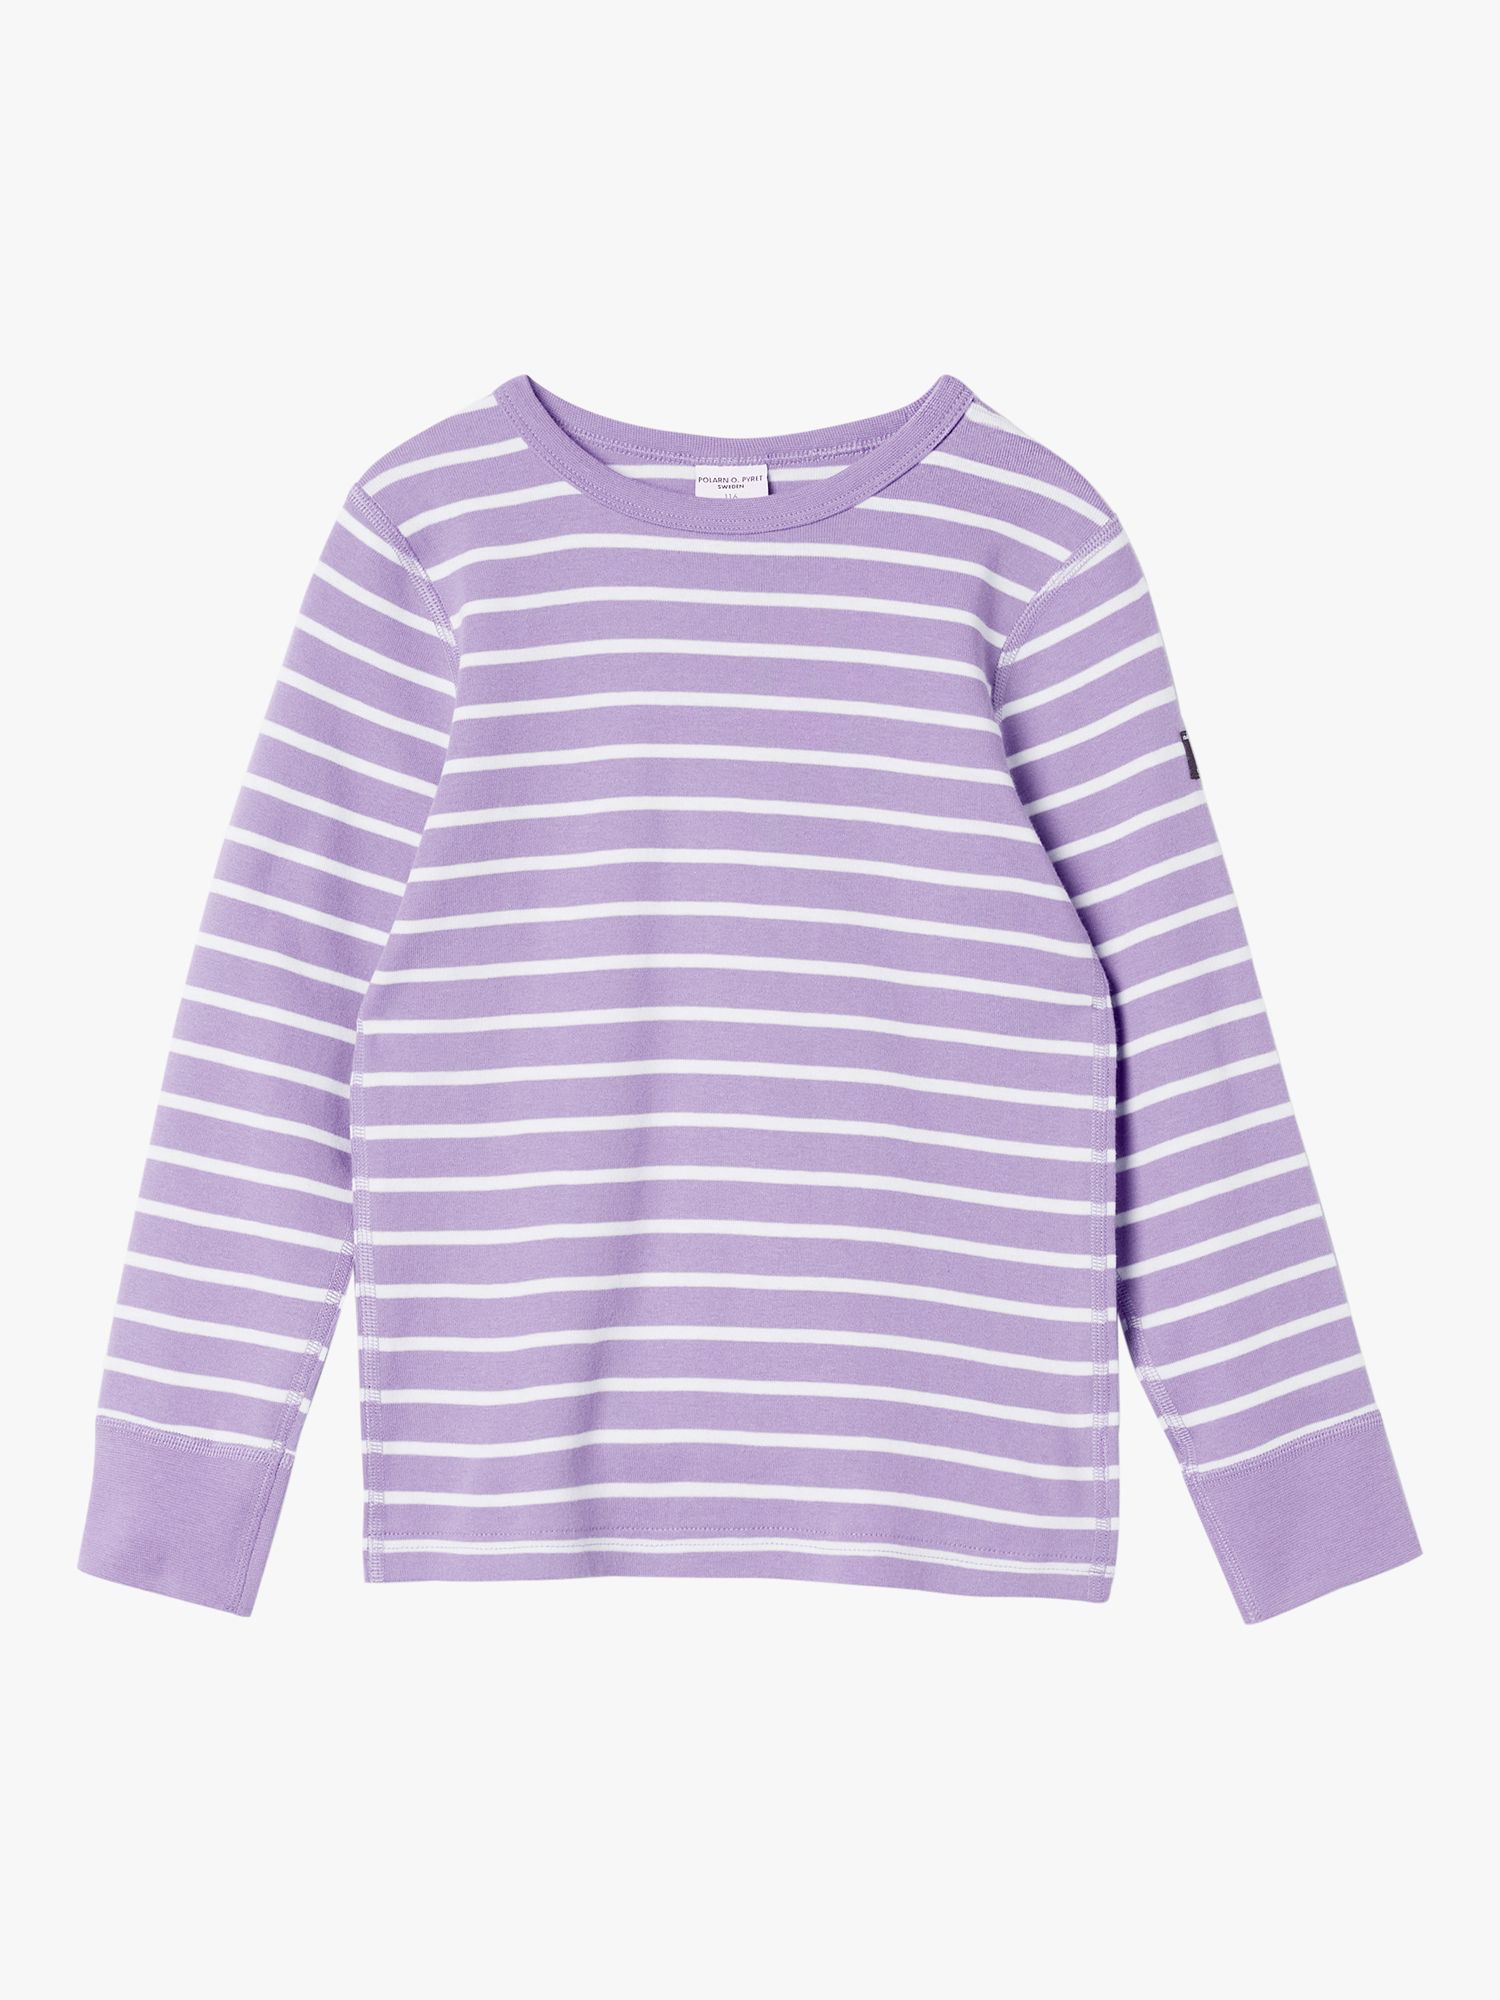 Polarn O. Pyret Kids' Organic Cotton Stripe Top, Purple, 2-3 years